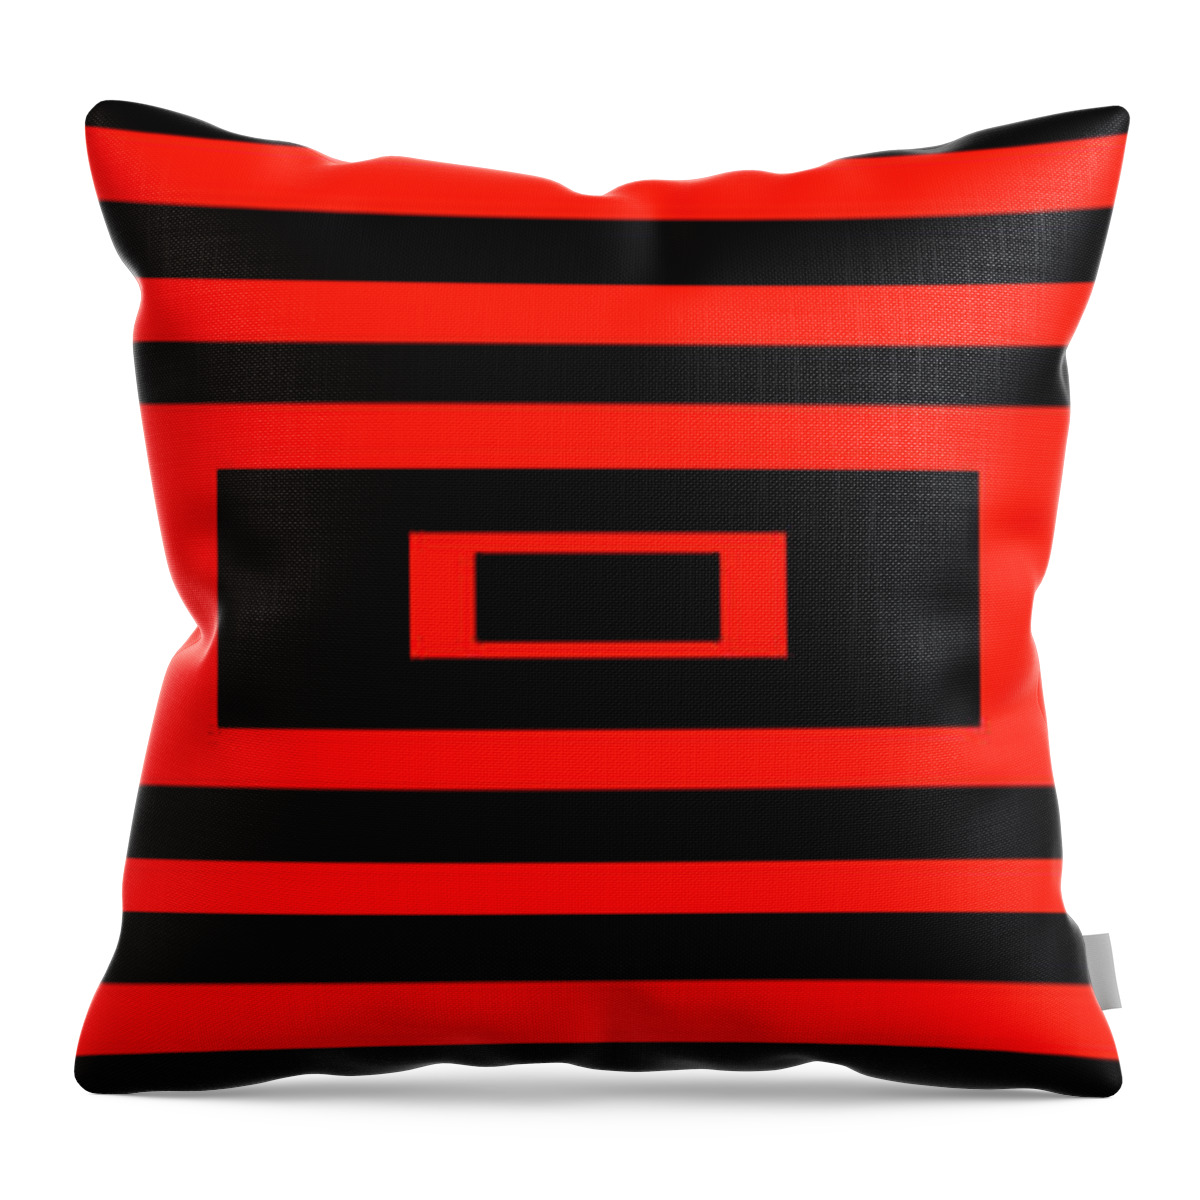 Pop Art Throw Pillow featuring the digital art Red Rectangle by Mike McGlothlen